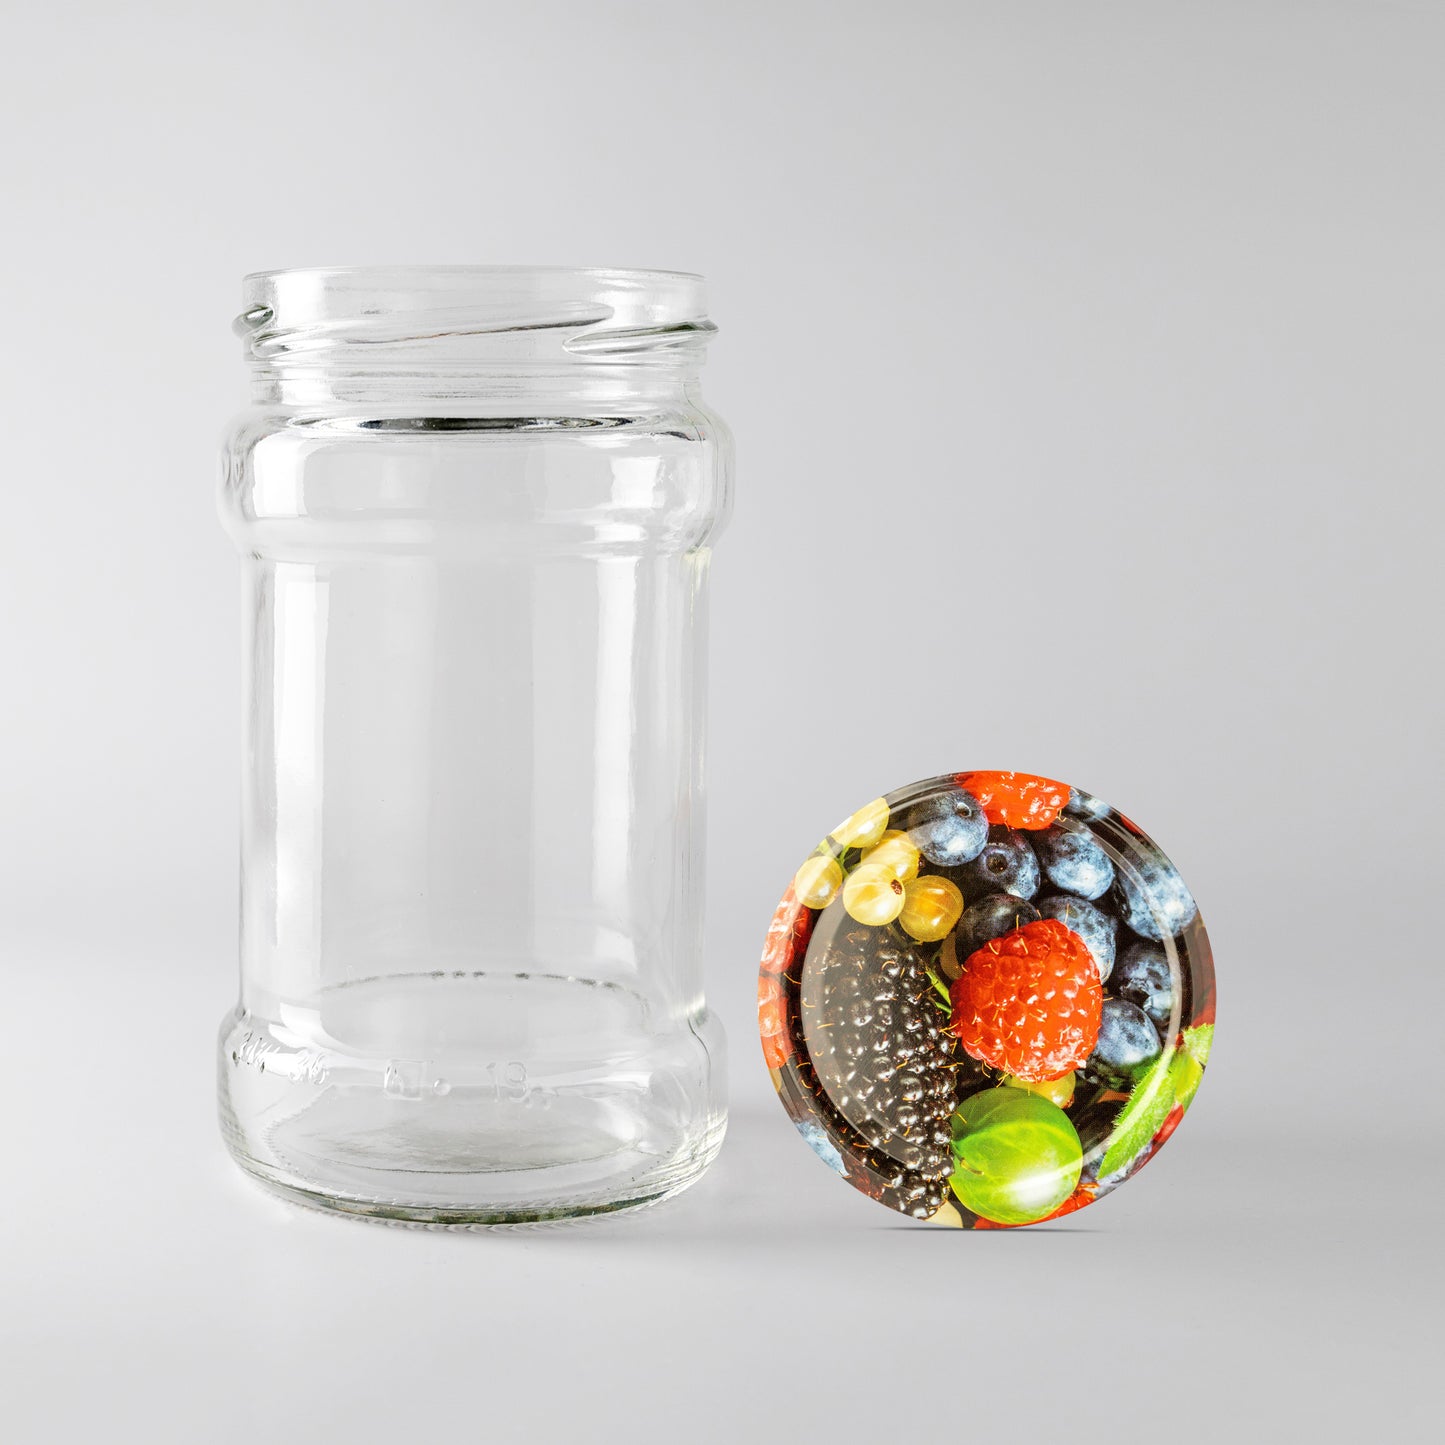 314 ml glass jar